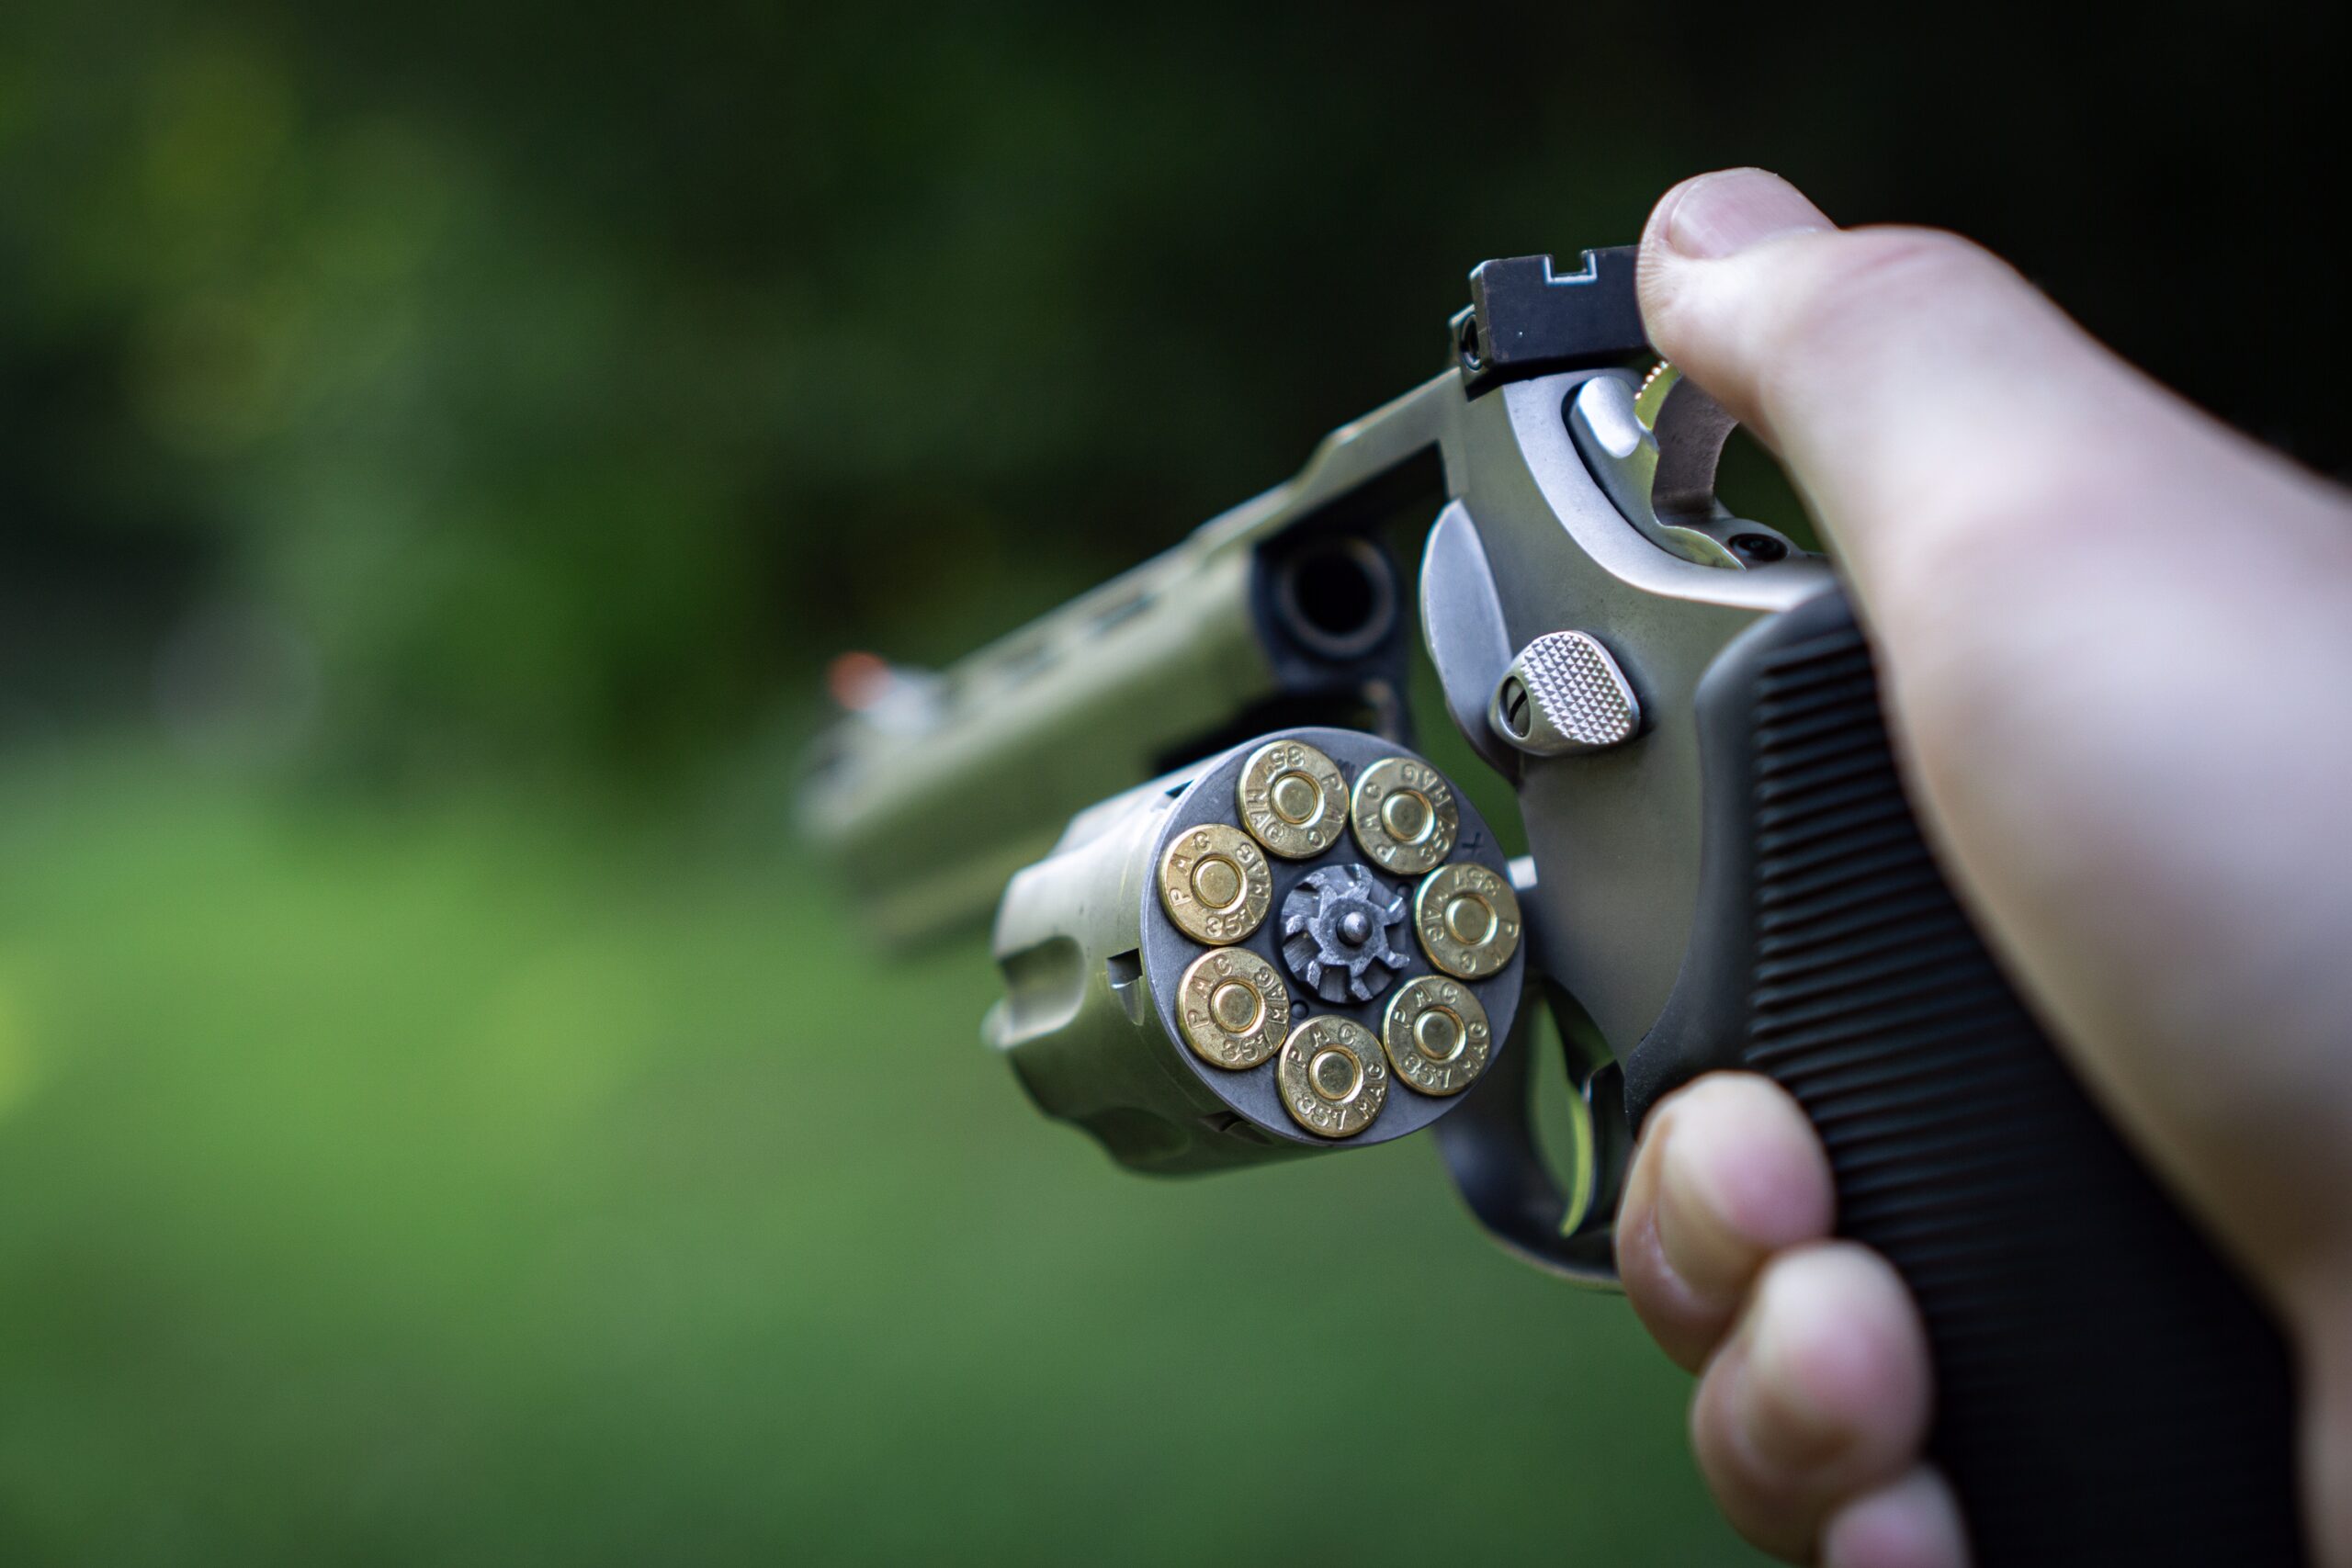 Revolver test: Taurus 689 in .357 Magnum - is it worth its price?